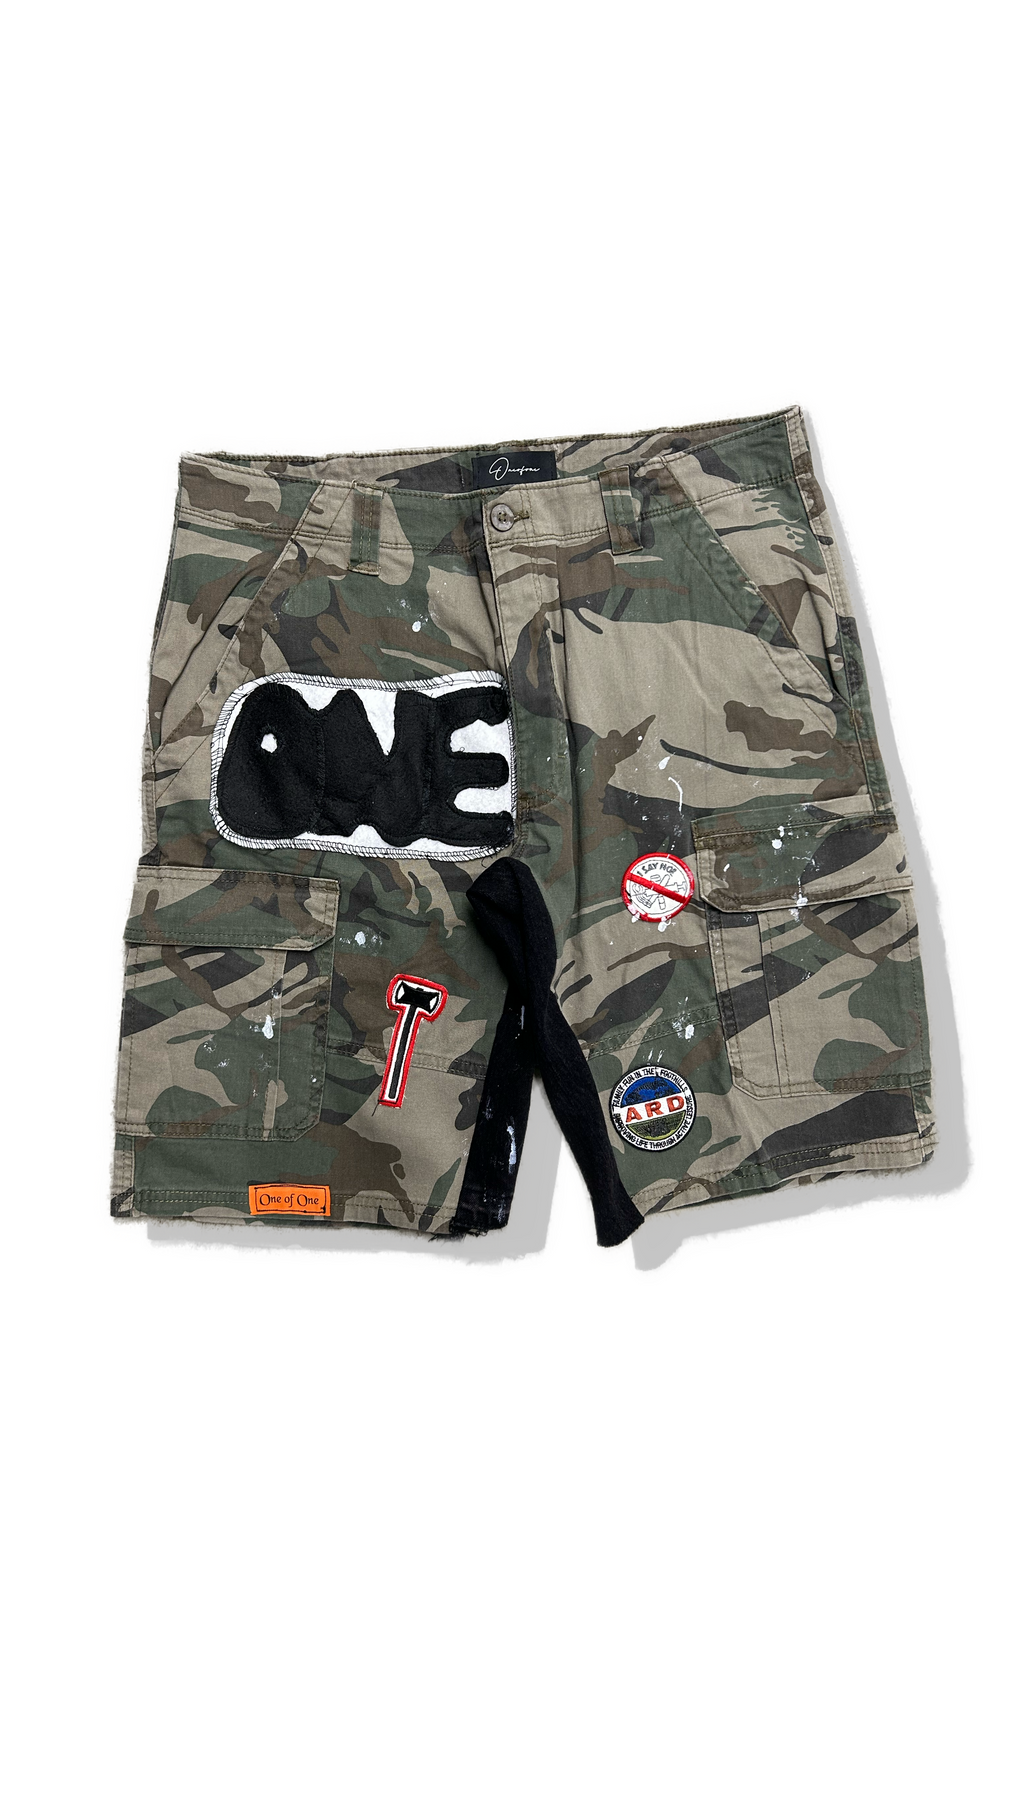 Camo Boy Scout shorts